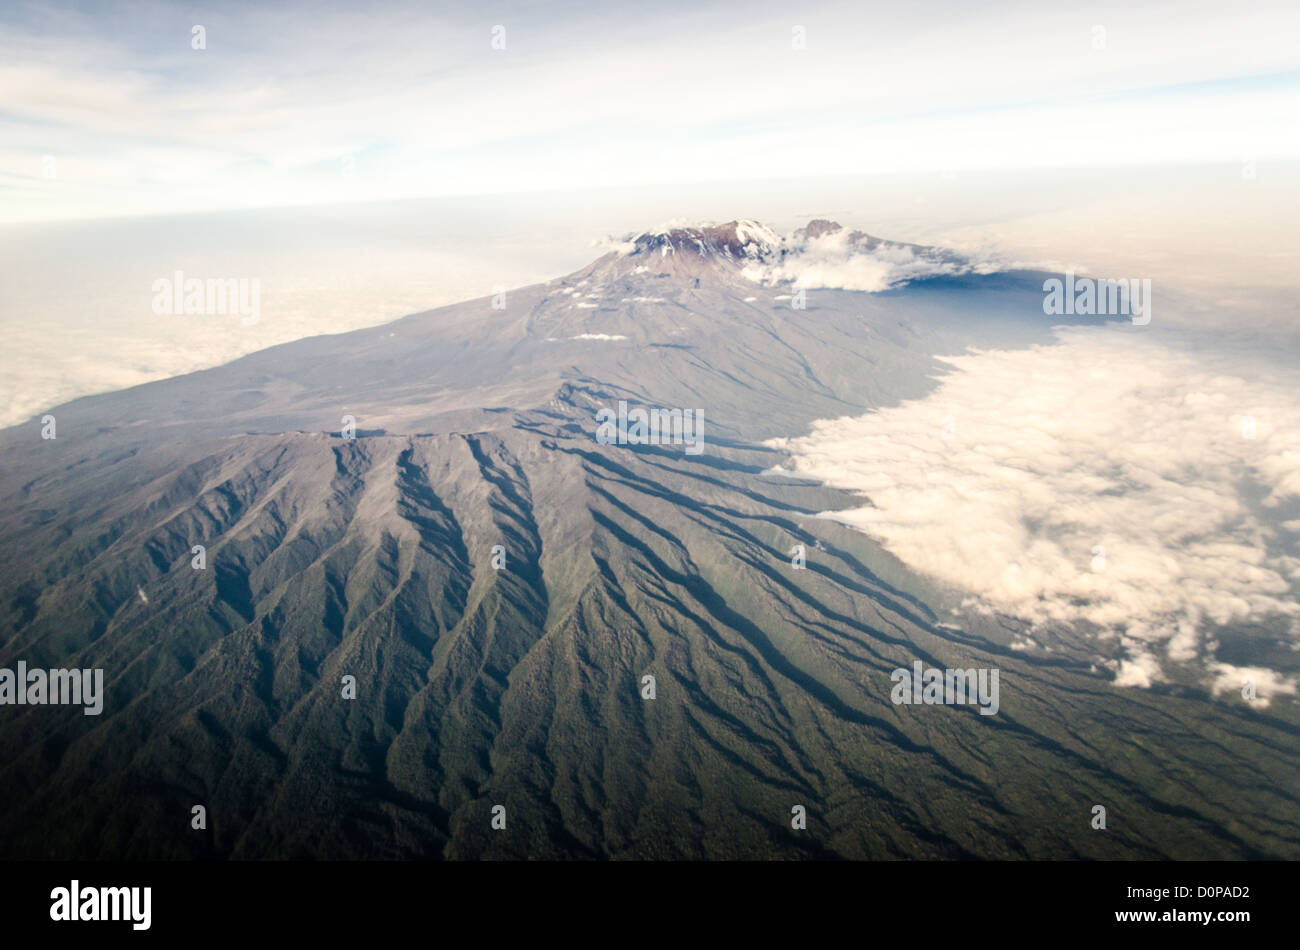 MT KILIMANJARO, Tanzania - Mount Kilimanjaro Aerial View Wide Shot. An aerial view of Mount Kilimanjaro, the highest peak in Africa, with a snow-covered peak. Stock Photo